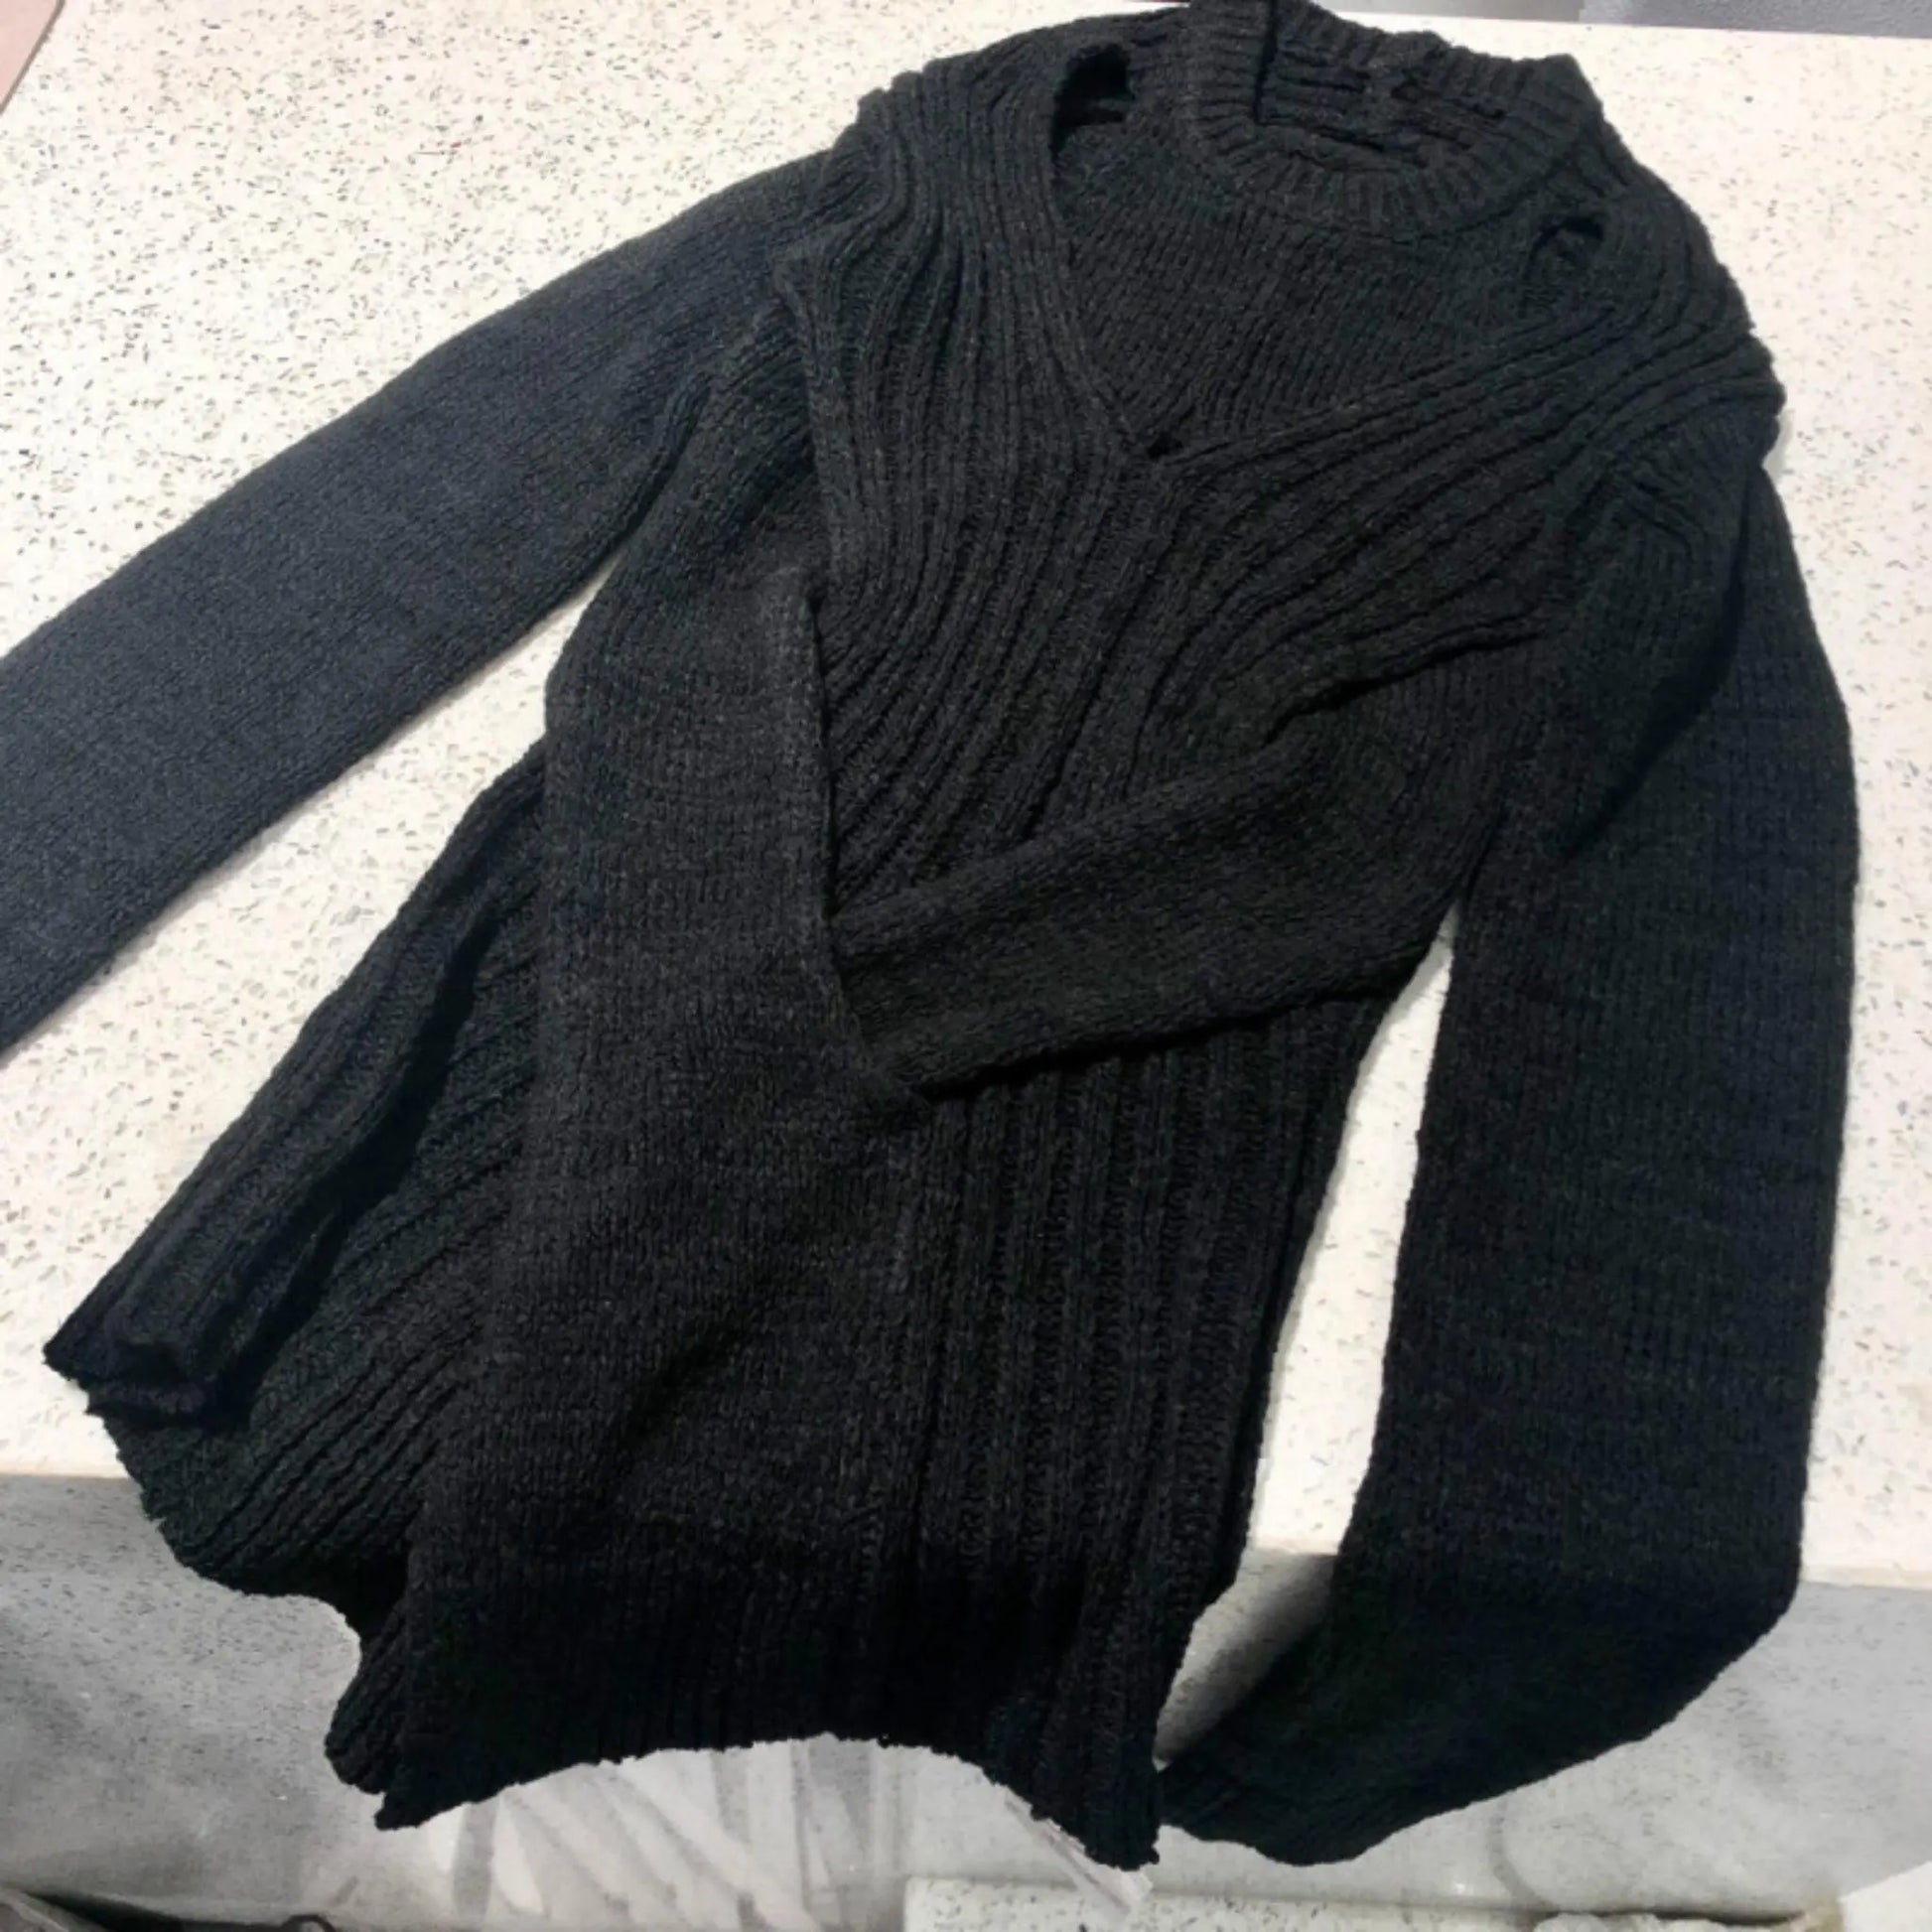 Asymmetric Sweater OCS Trade Co., Ltd.